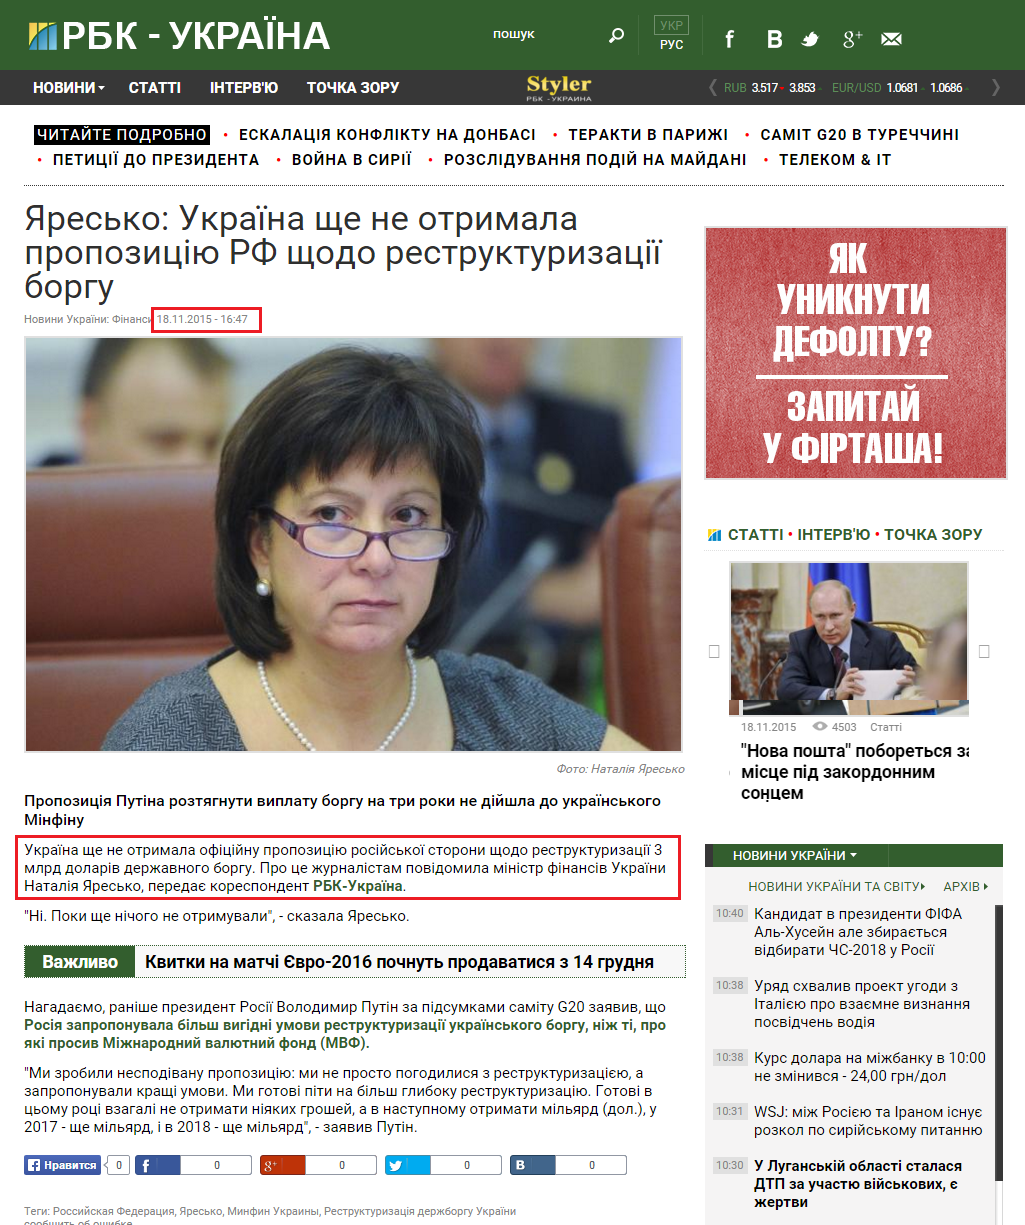 http://www.rbcua.com/ukr/news/resko-ukraina-eshche-poluchila-predlozhenie-1447857873.html